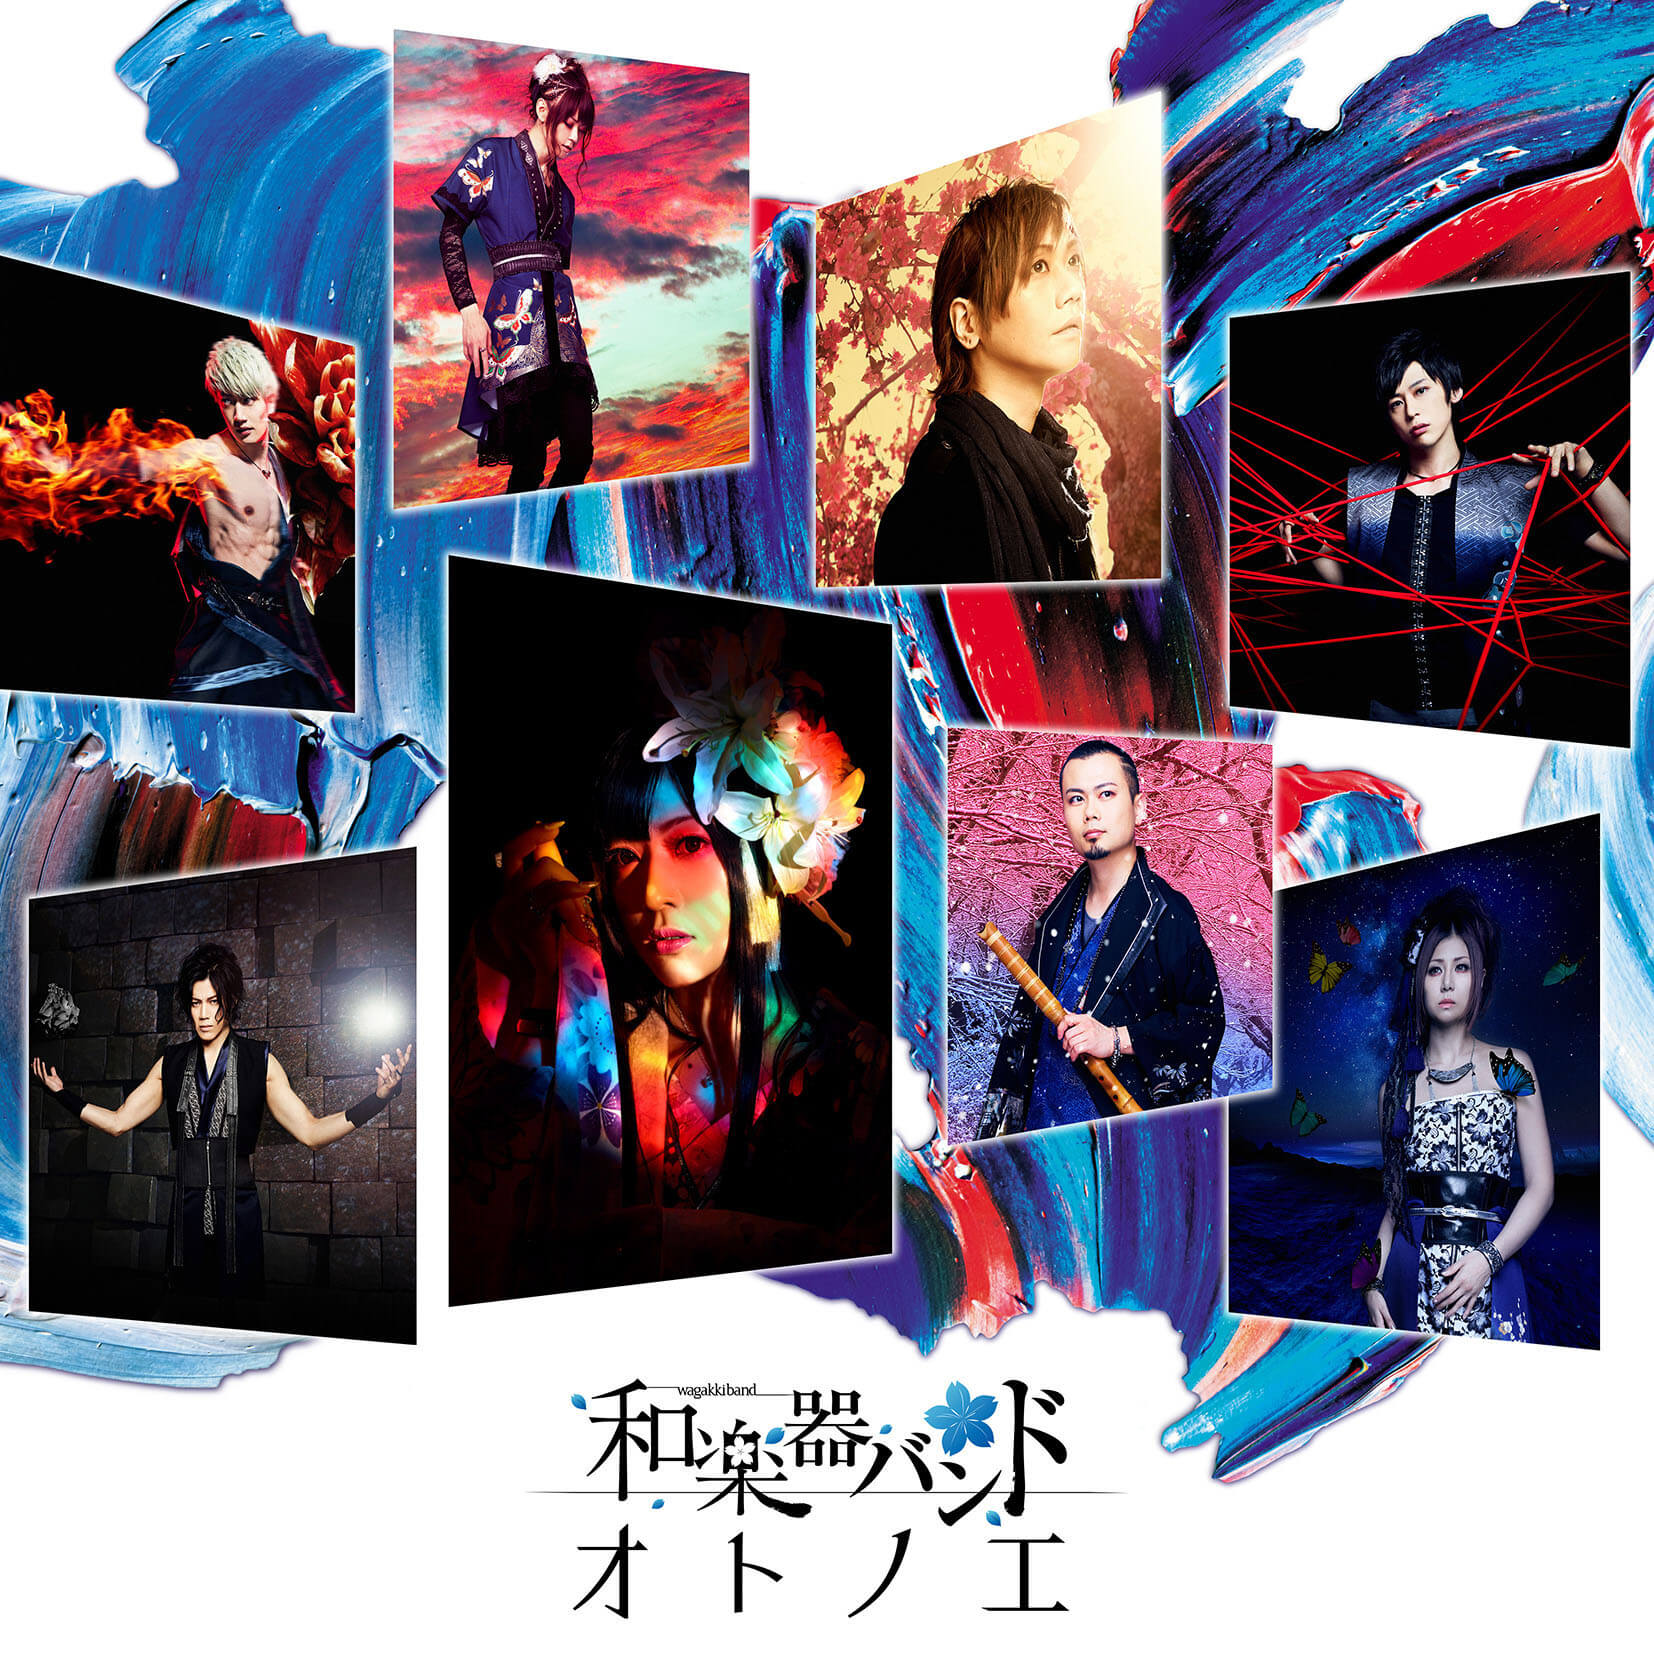 Waggaki Band Release Music Video for “Sabaku no Komori Uta” & “Sasame Yuki for Piano and Symphonic Orchestra”